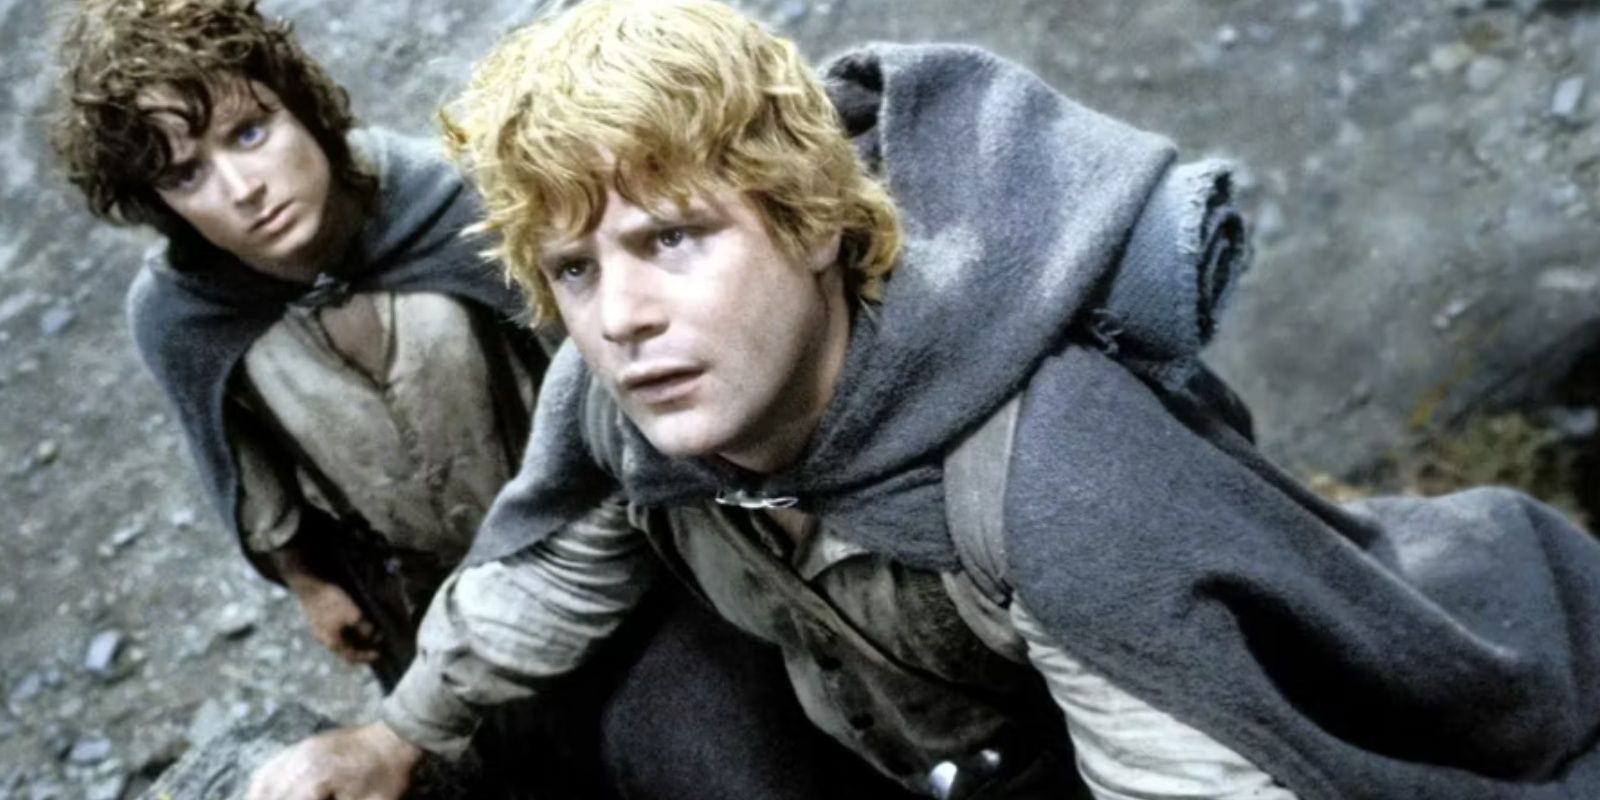 Elijah Wood as Frodo. Sean Astin as Sam.